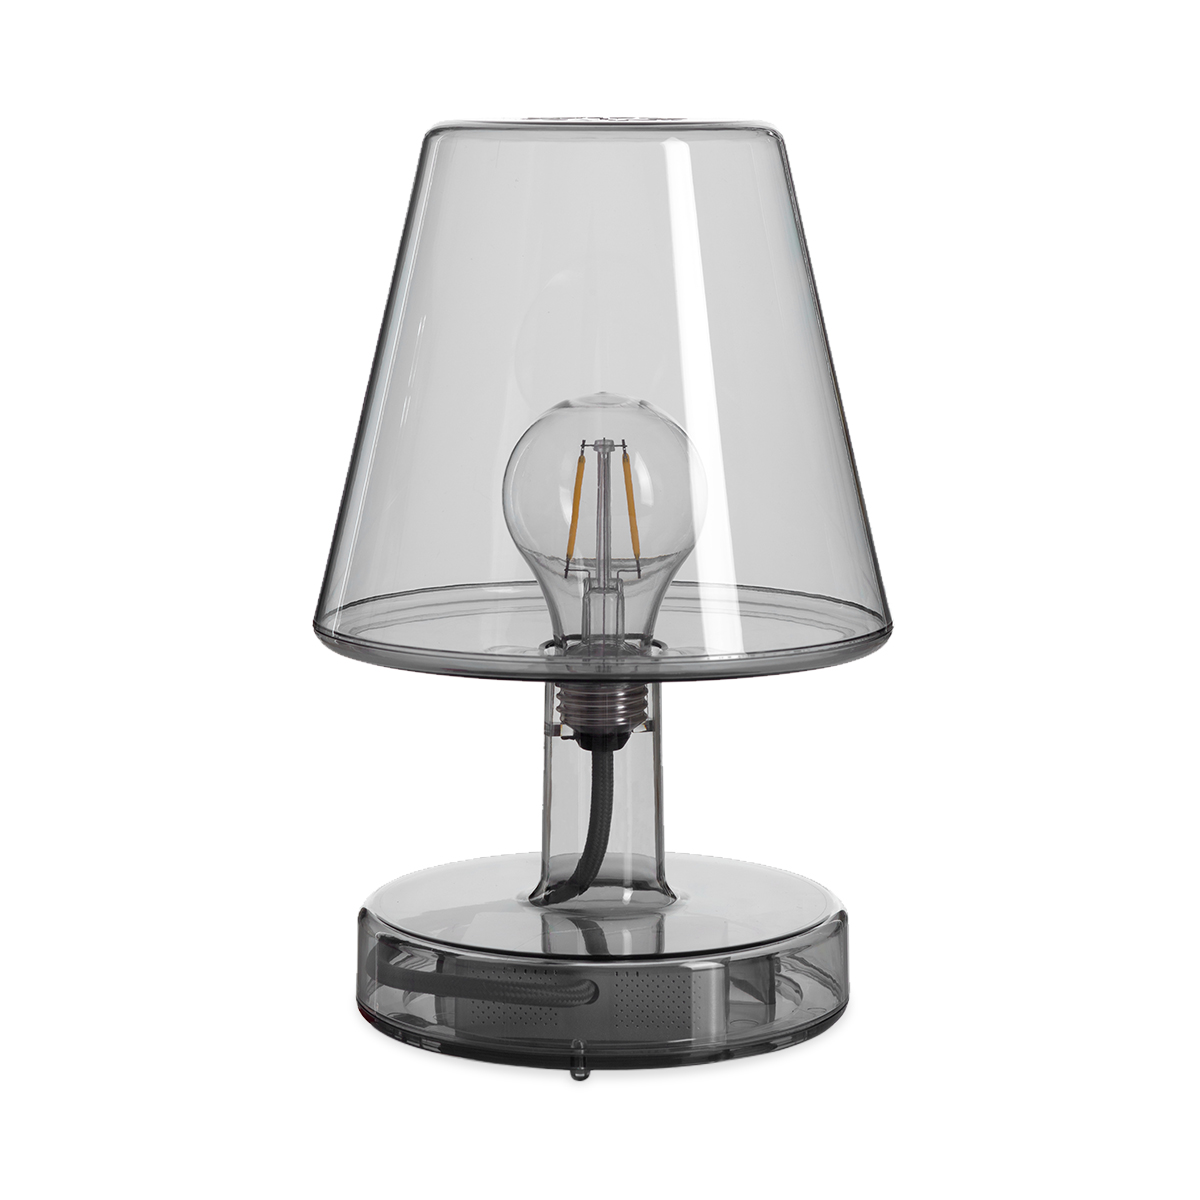 Transloetje: A translucent wireless table lamp | Fatboy